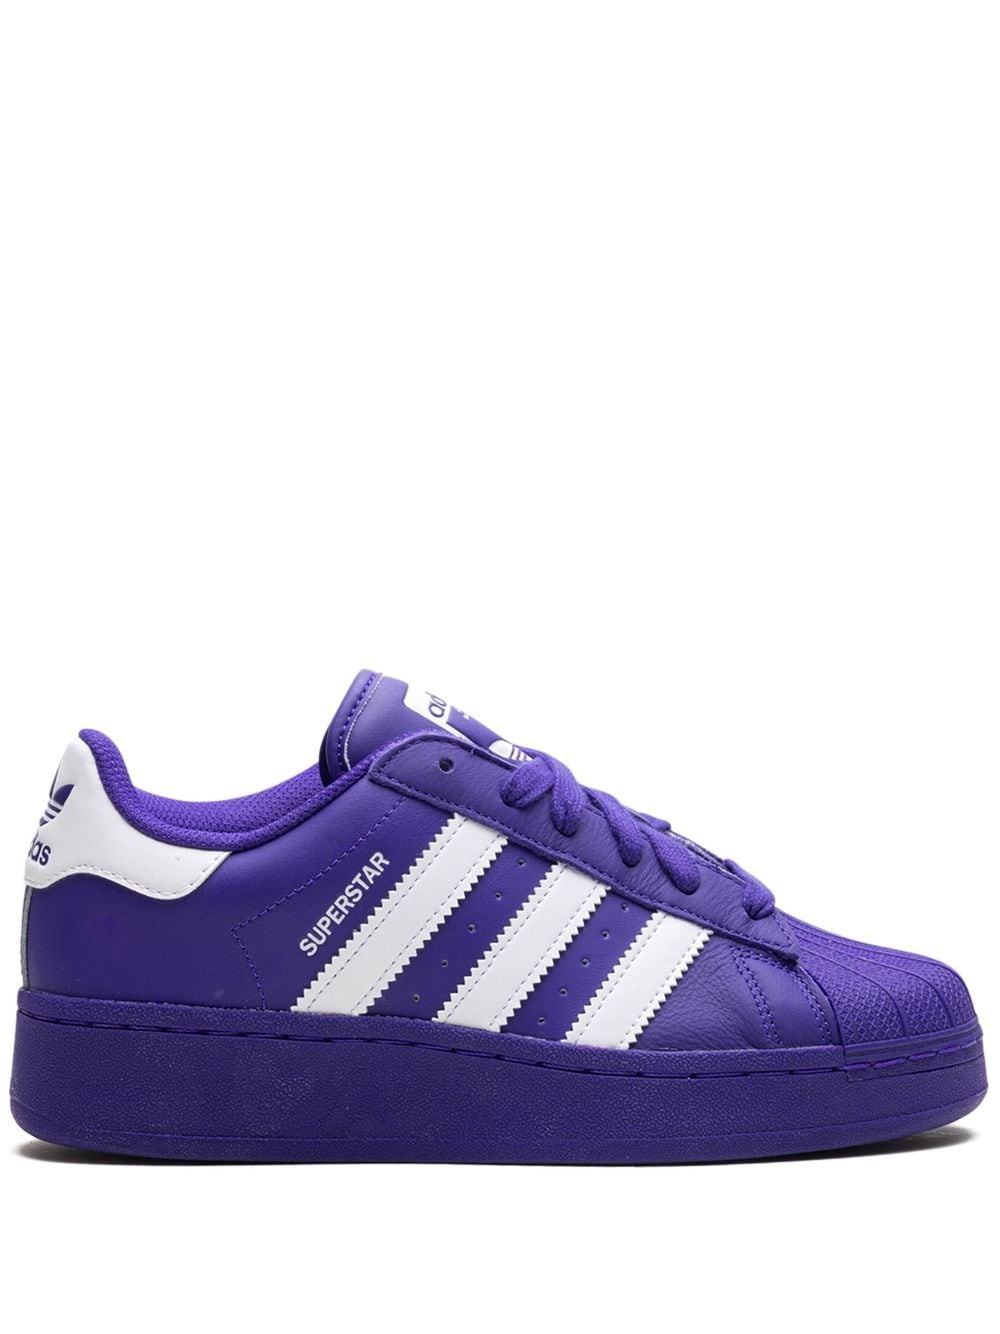 Superstar XLG "Purple" sneakers - 1